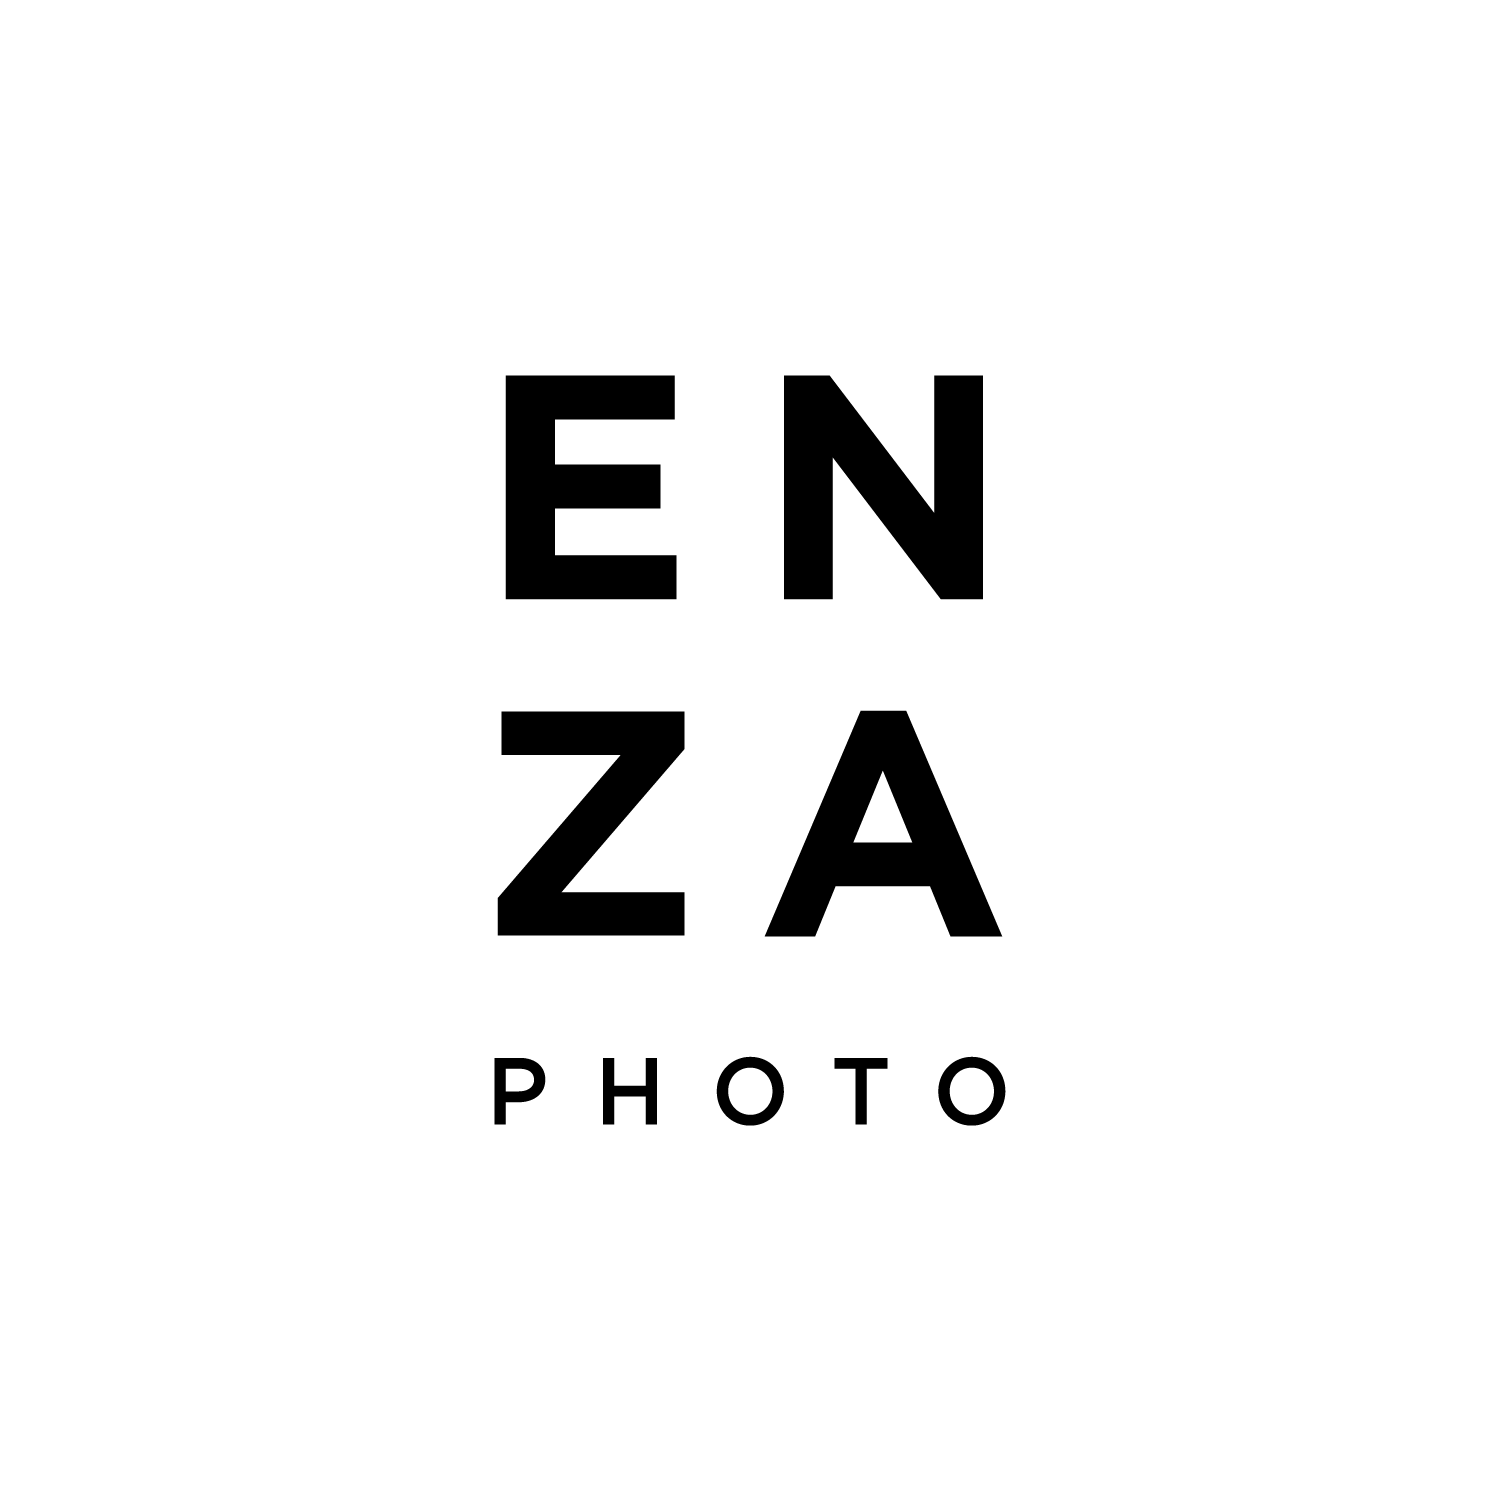 Enza Photo logo by OLSON MCINTYRE